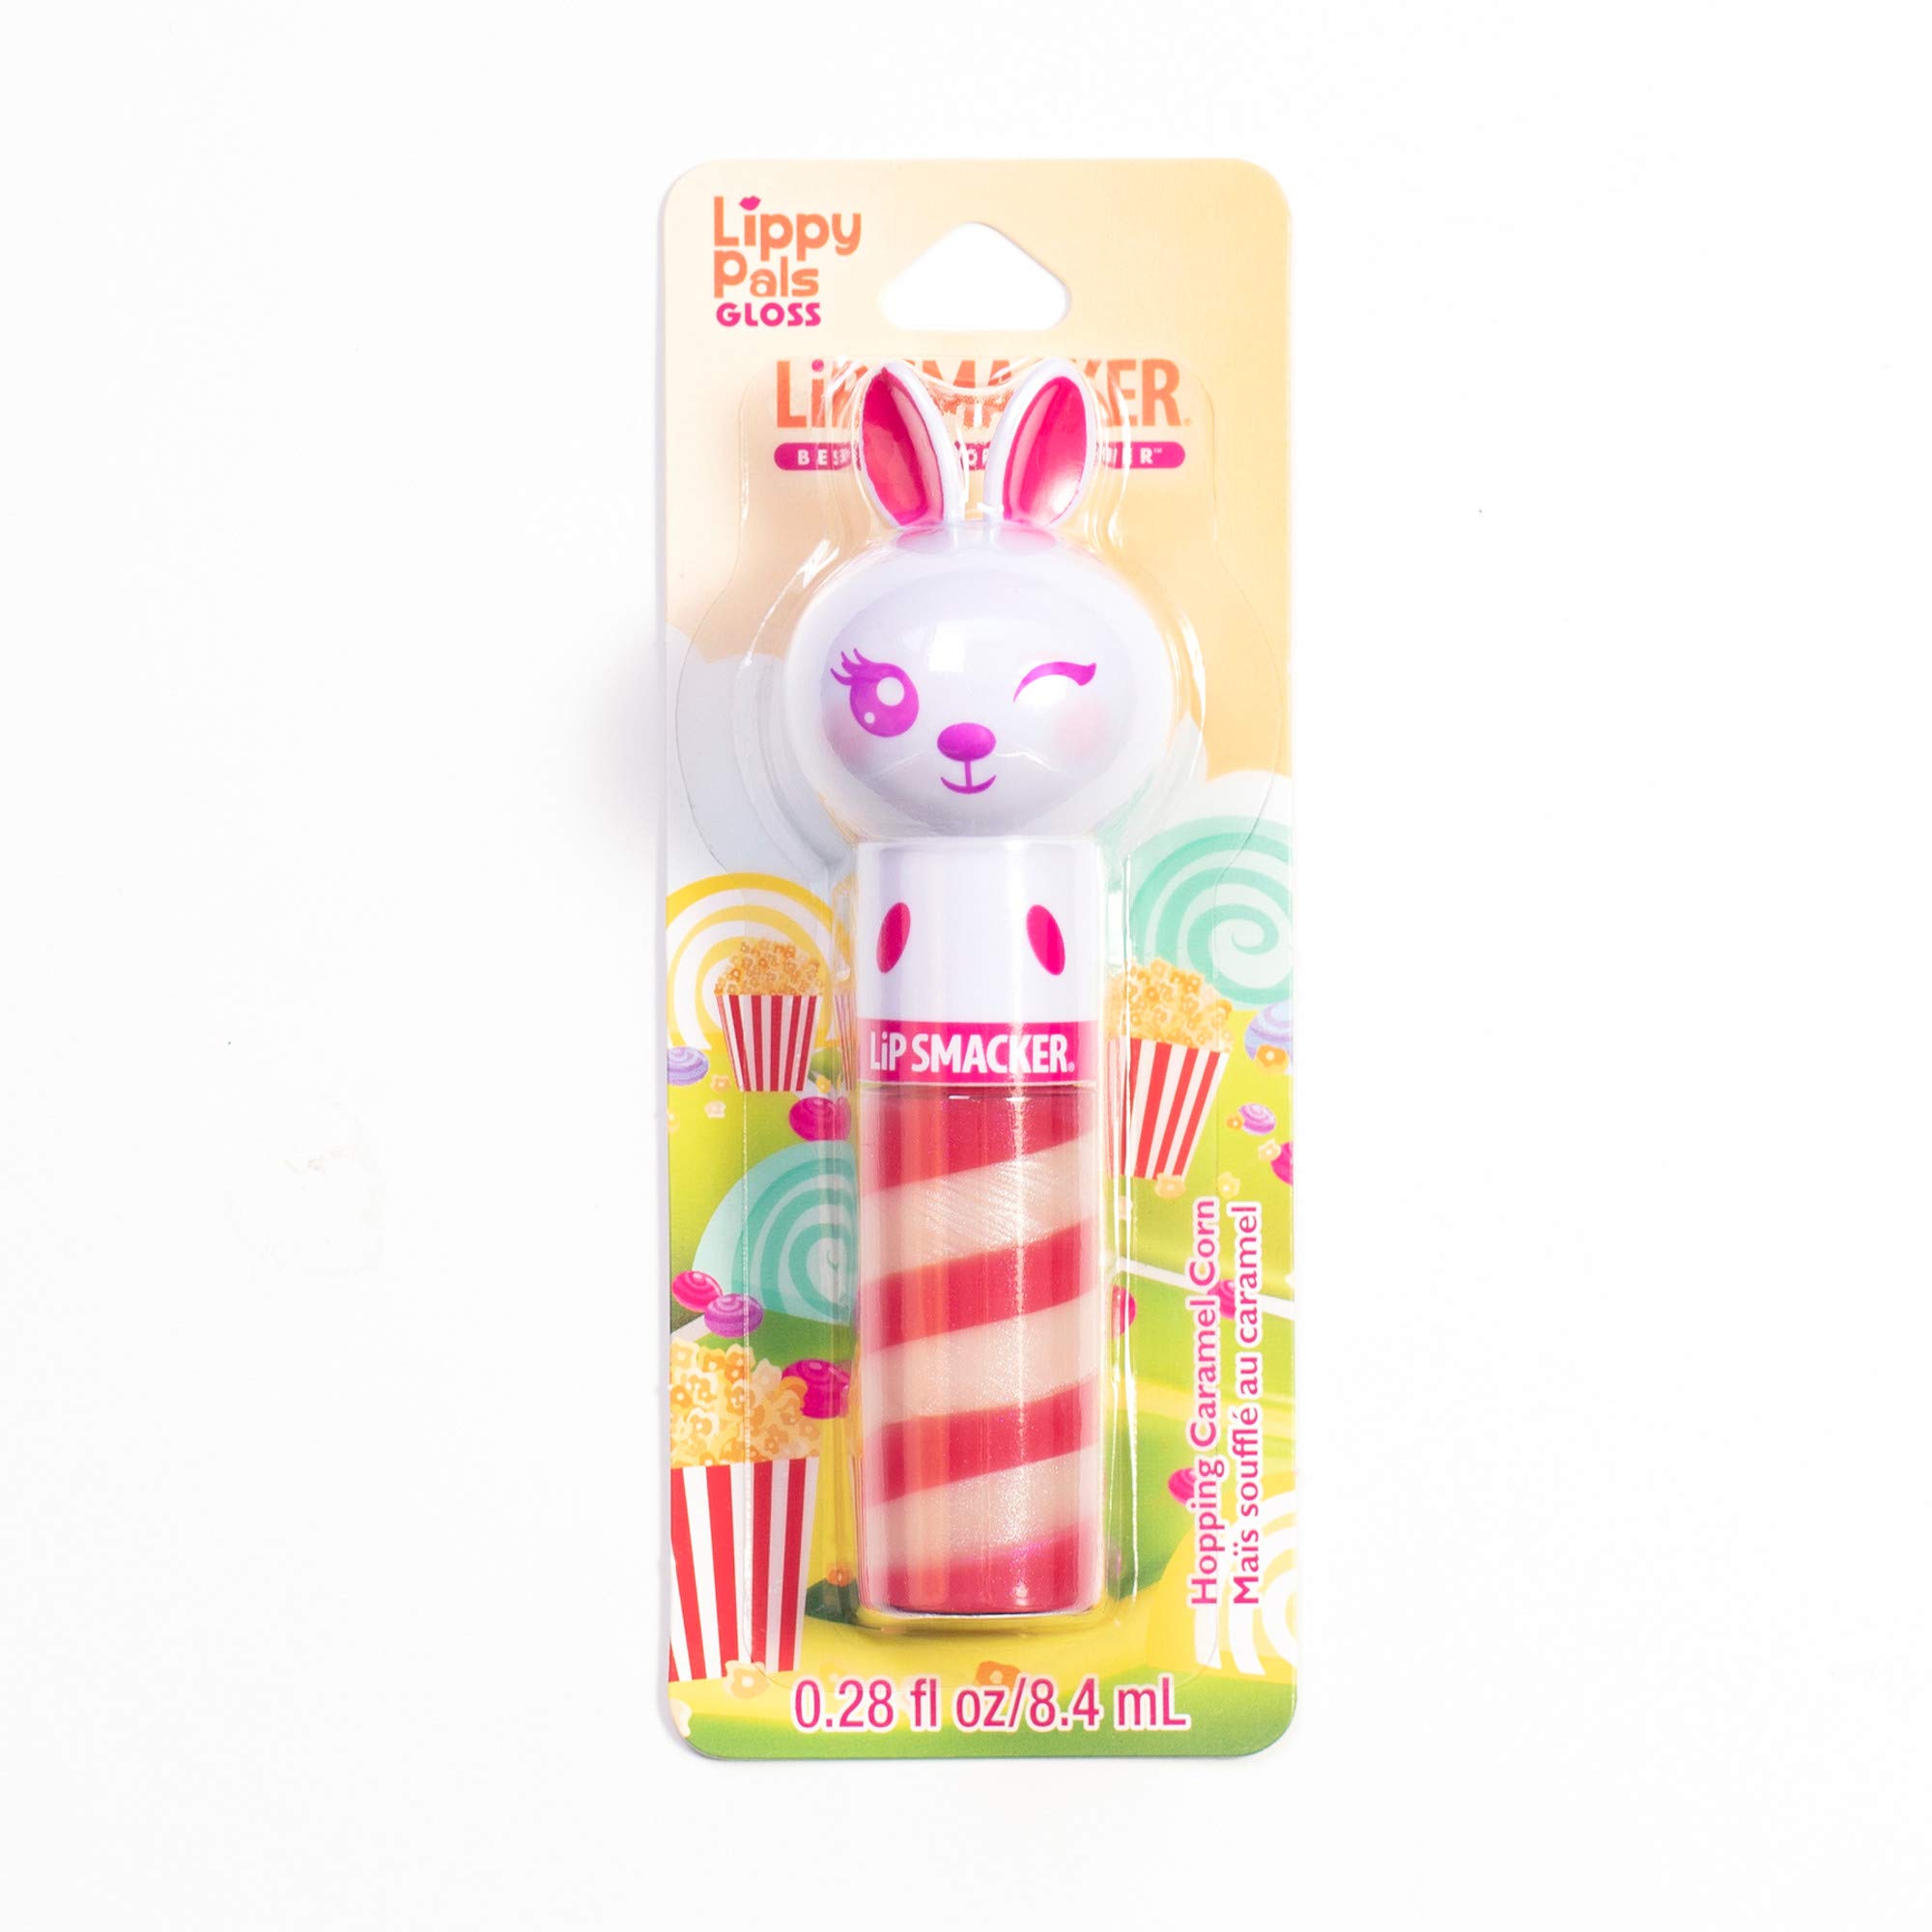 Lip Smacker Lippy Pals Swirls Bunny, Flavored Moisturizing & Smoothing Soft Shine Lip Balm, Hydrating & Protecting Fun Tasty Glossy Finish, Cruelty-Free & Vegan - Hopping Caramel Corn